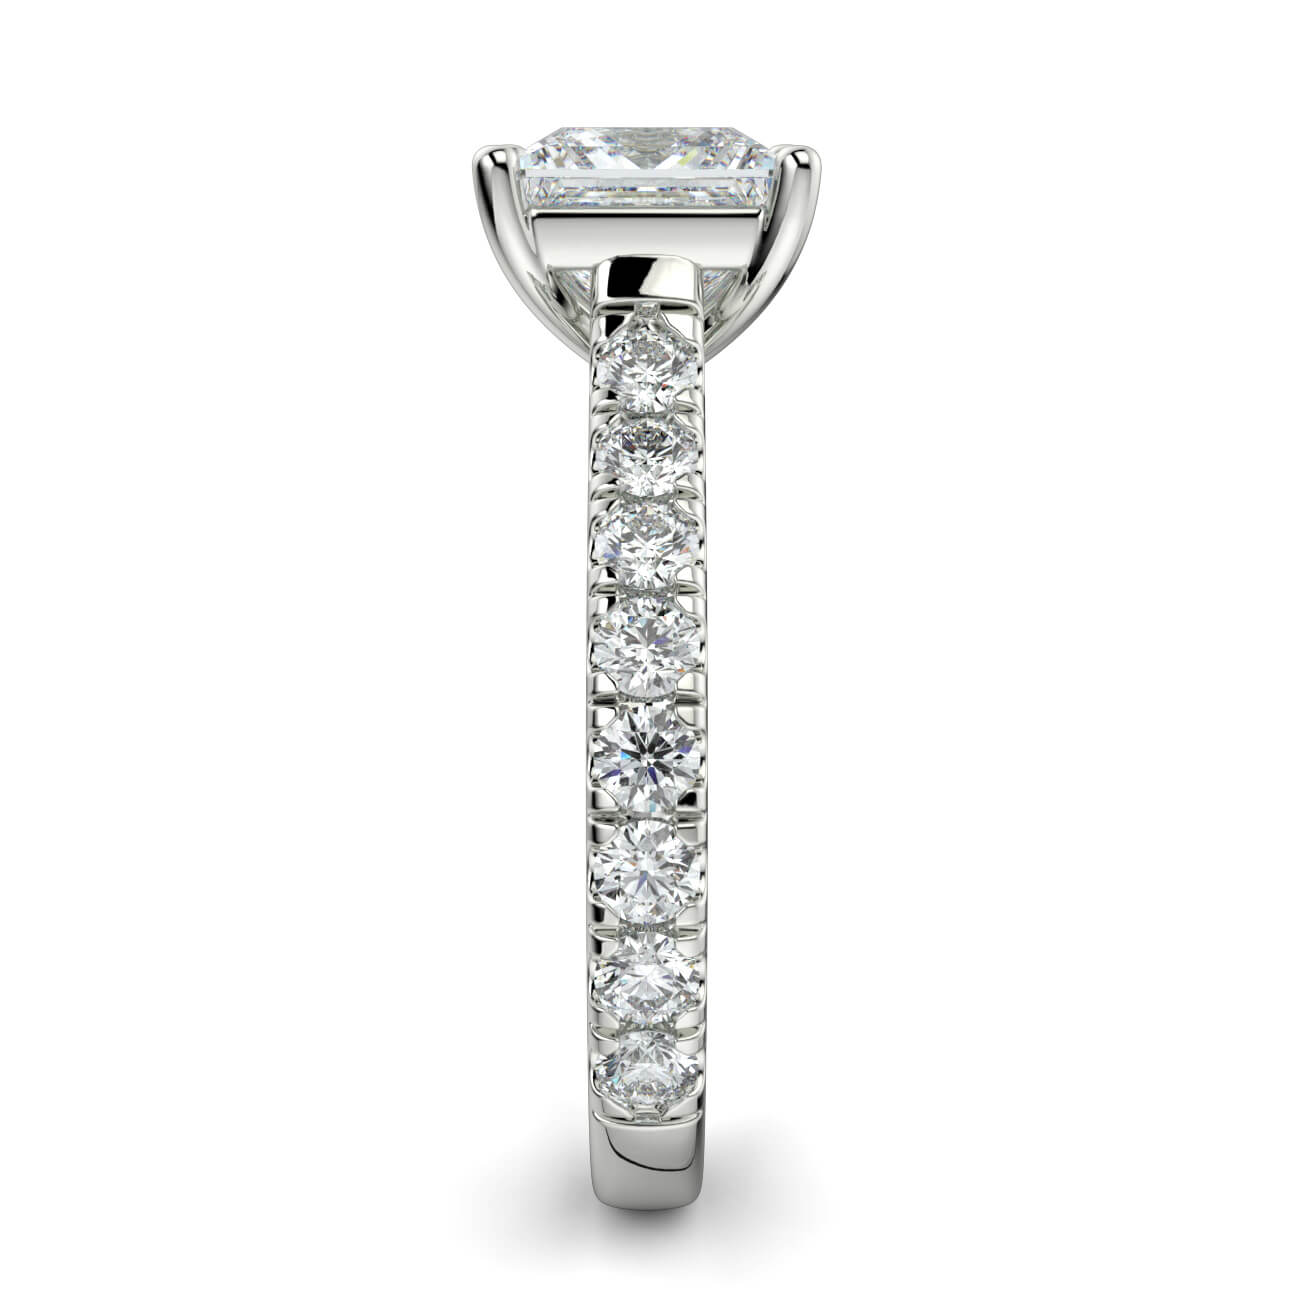 Prestige Princess Cut Diamond Engagement Ring In White Gold – Australian Diamond Network